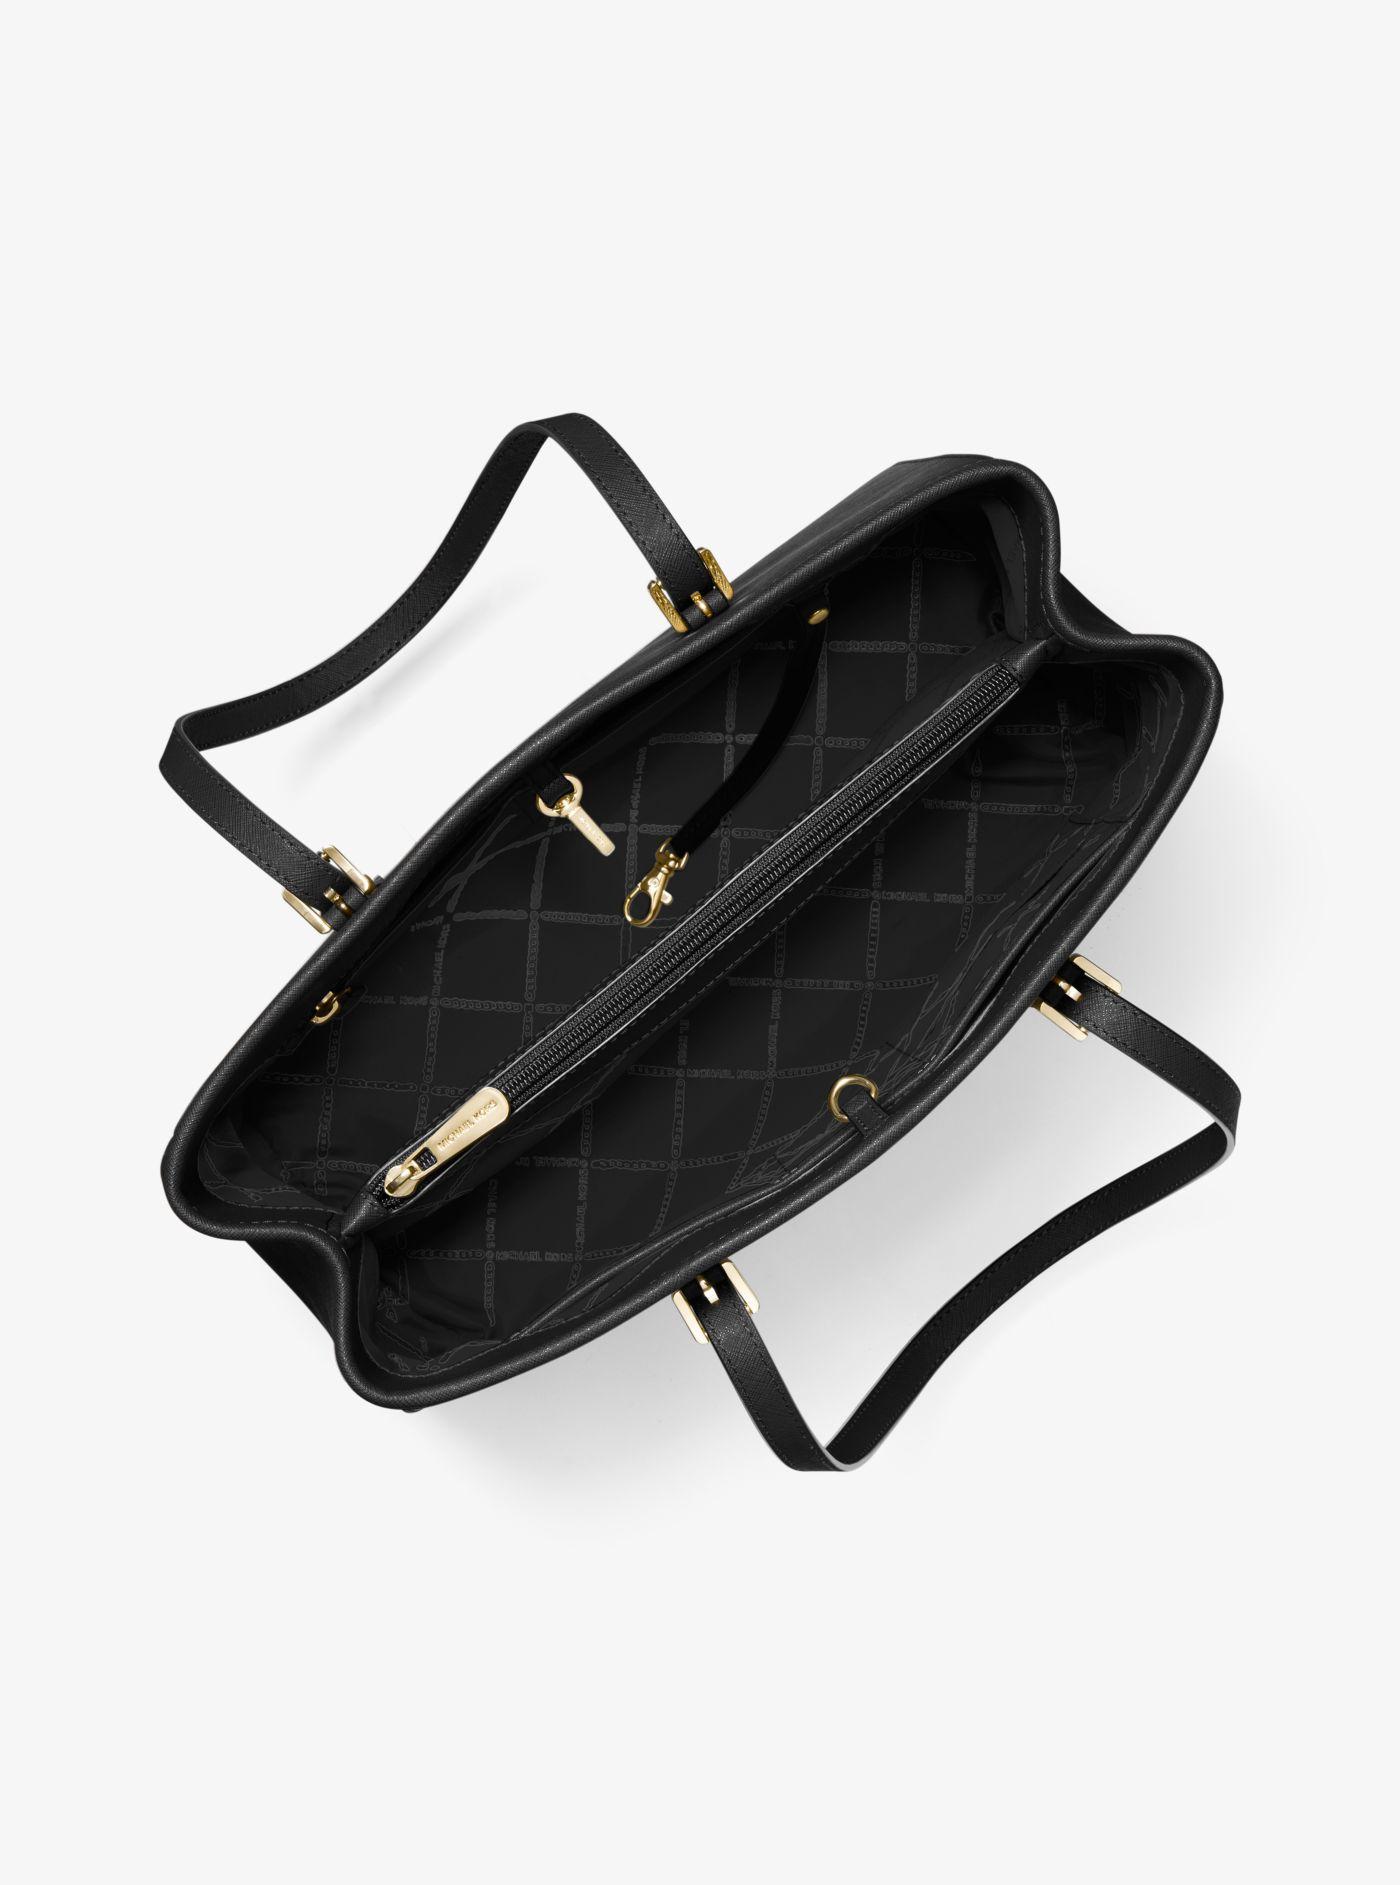 Michael Kors Jet Set Saffiano Leather Tote Bag in Black | Lyst